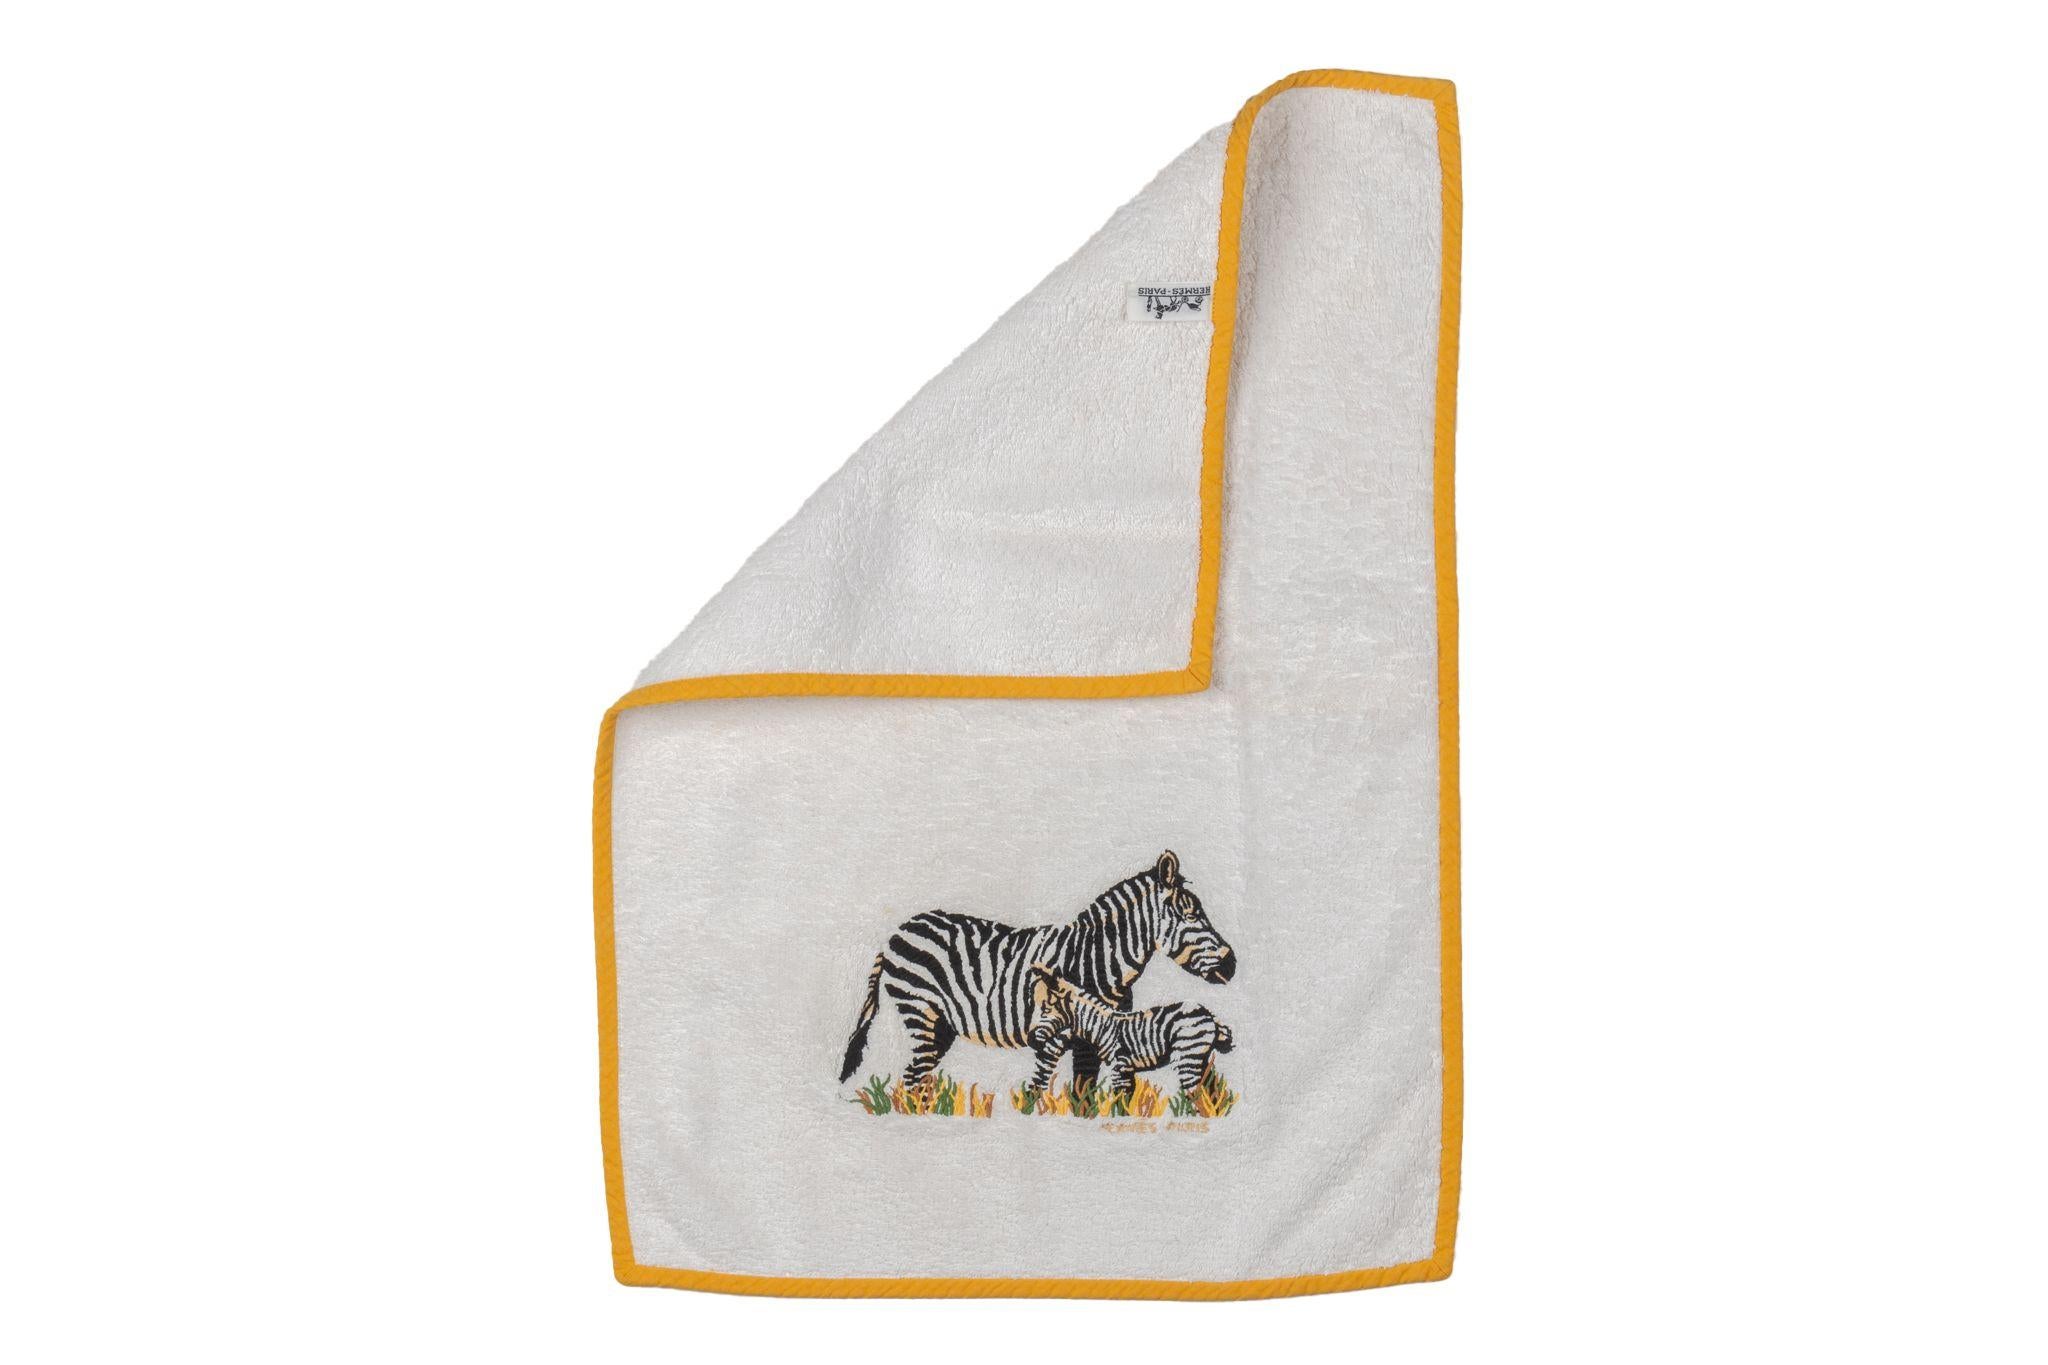 Hermès vintage white cotton terry cloth towel with yellow trim. Embroidered zebra design.
No box.